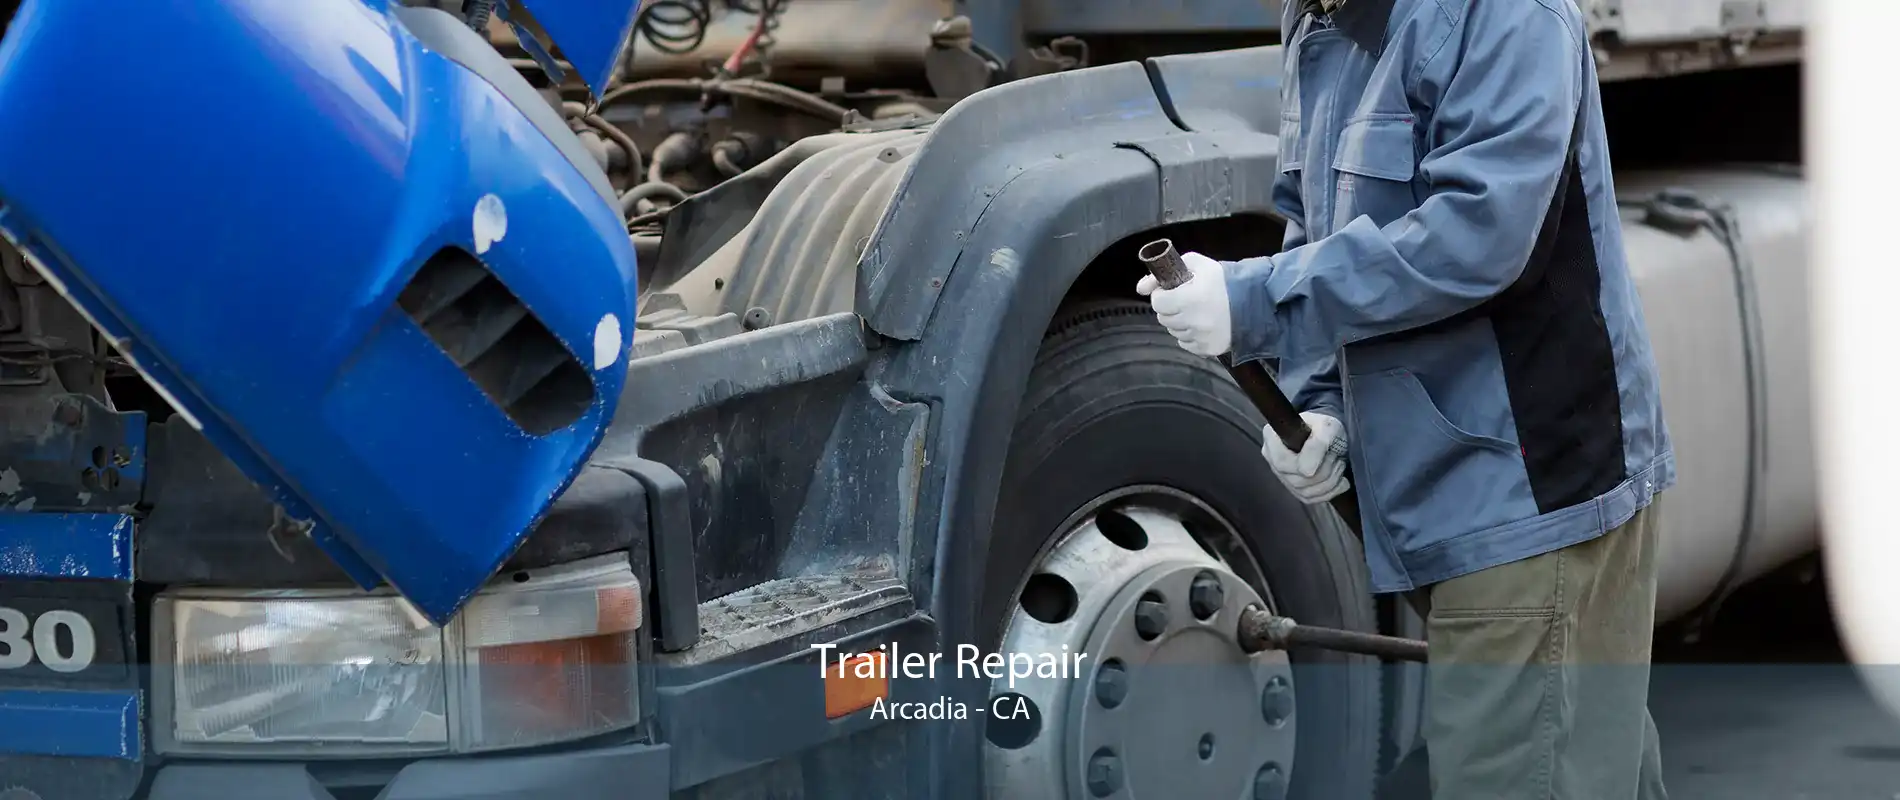 Trailer Repair Arcadia - CA